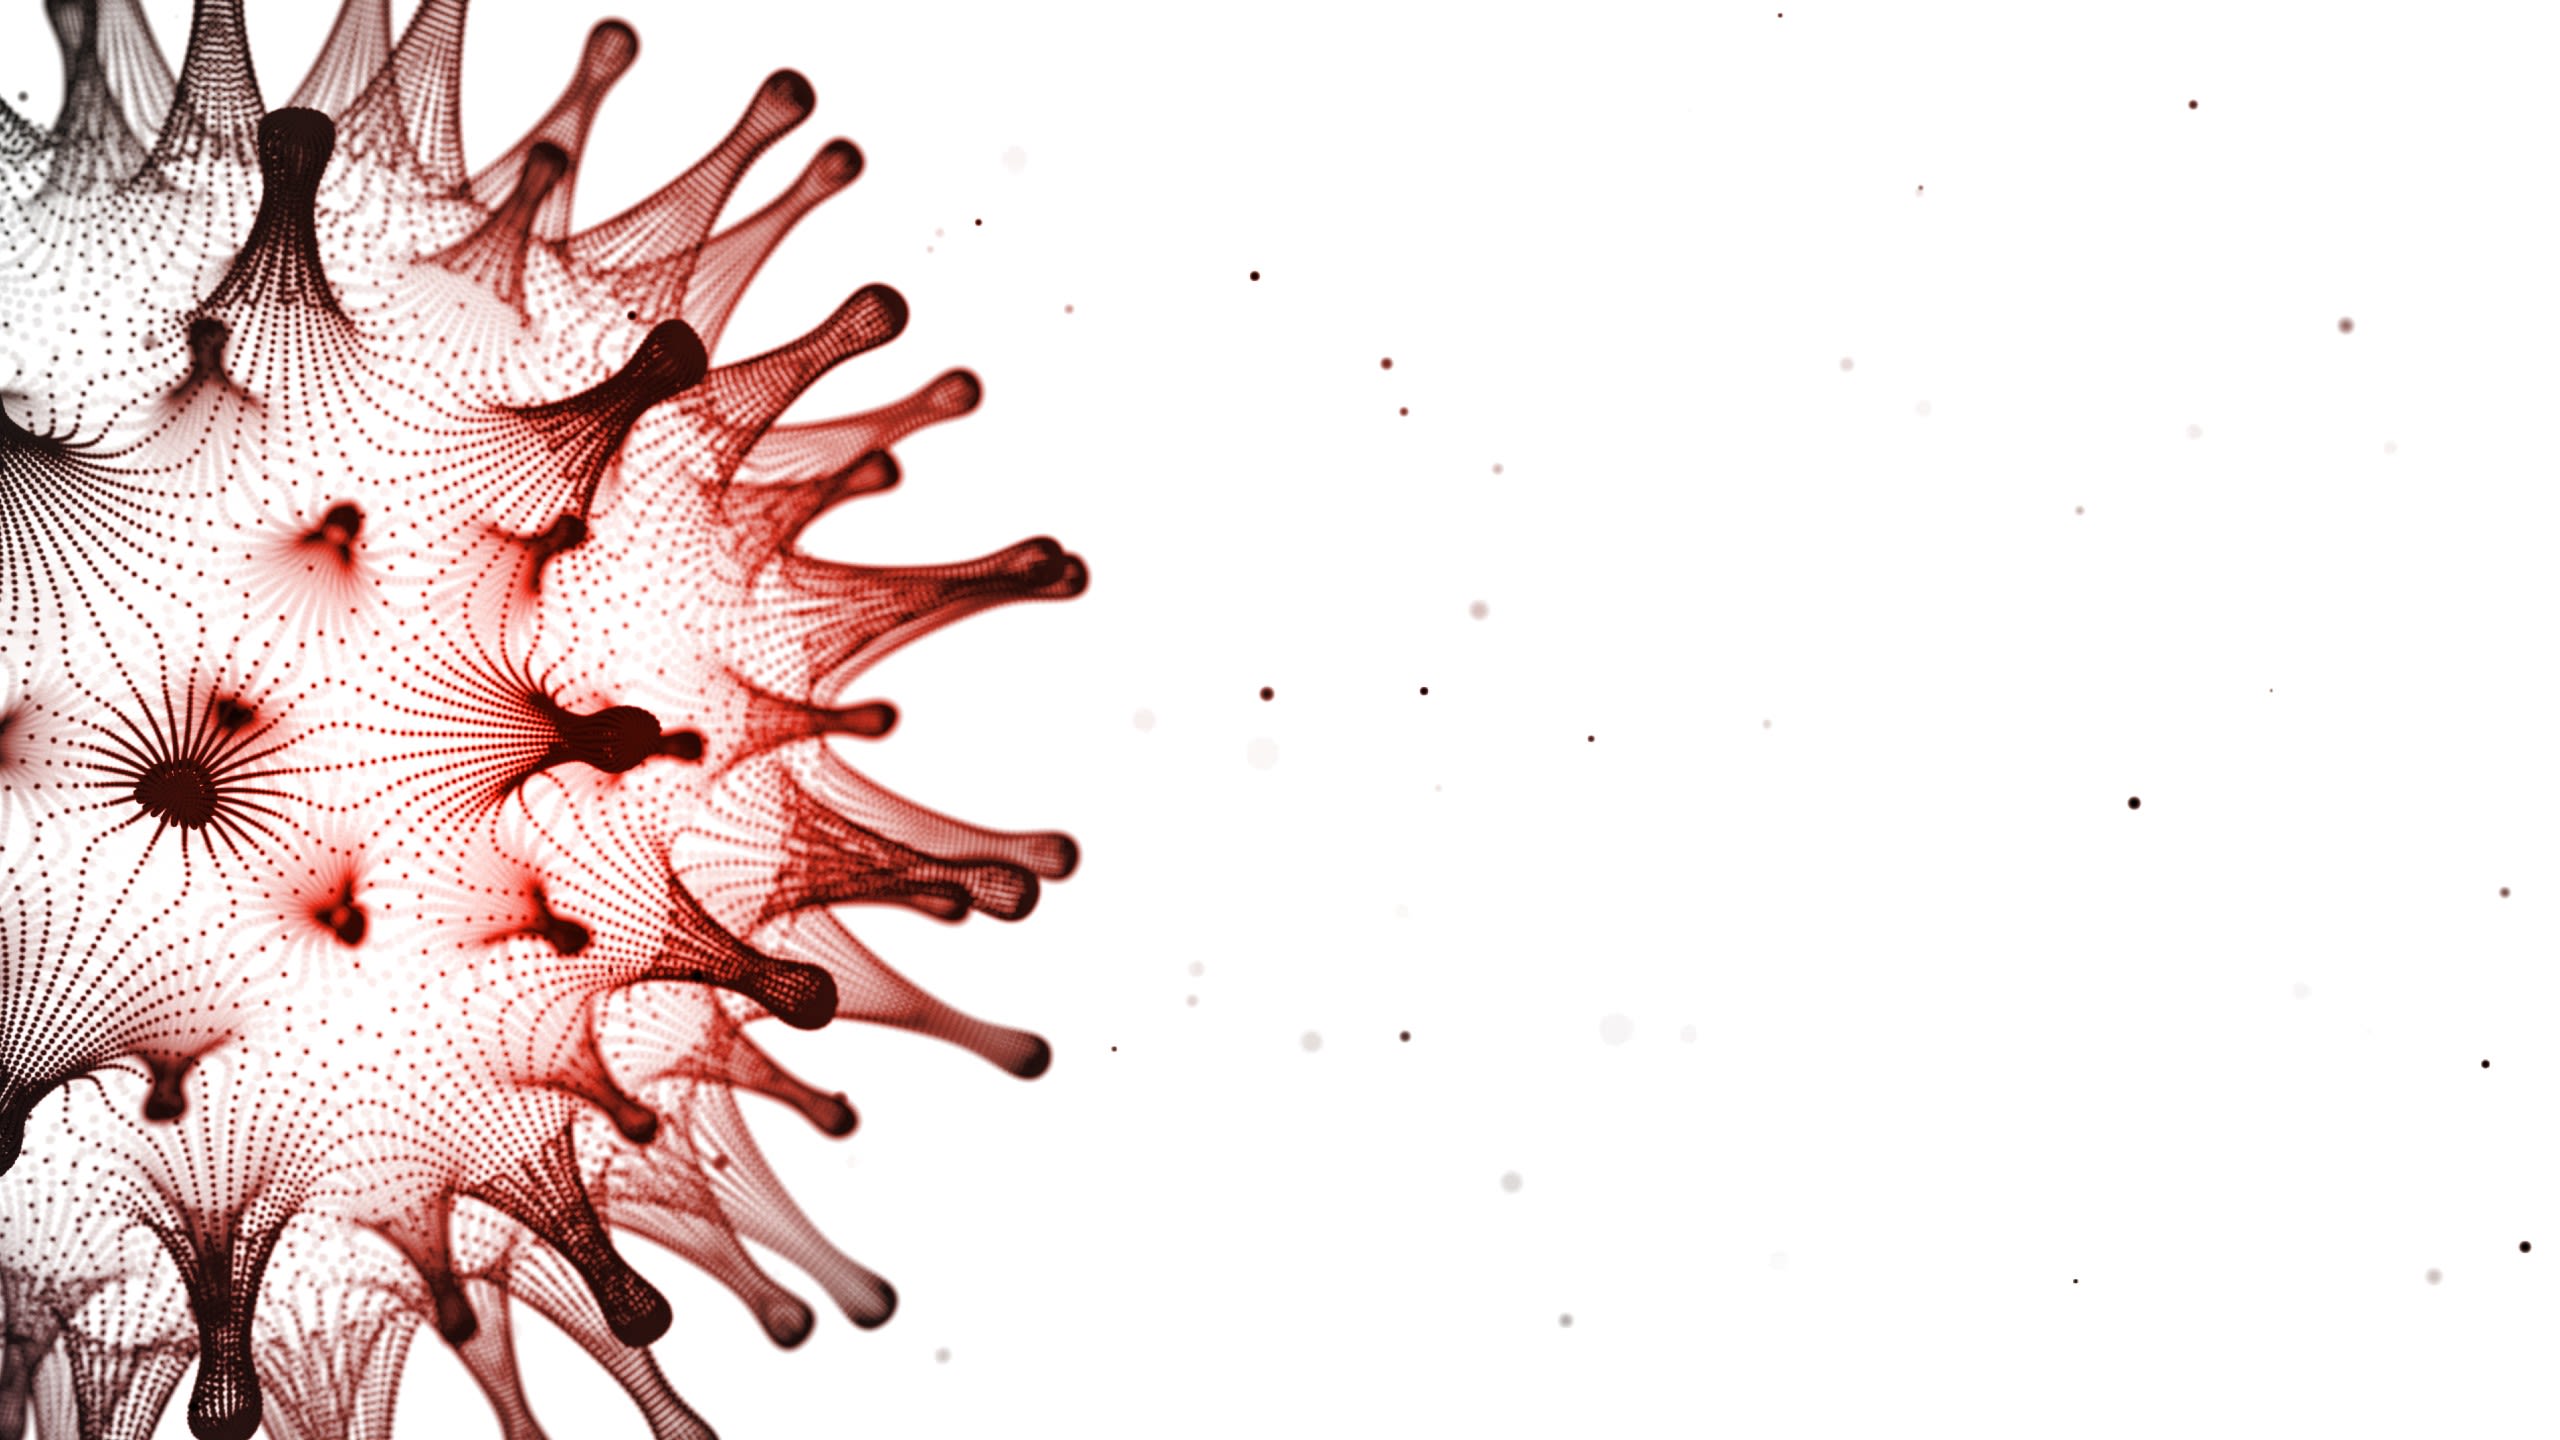 An artistic illustration of a coronavirus